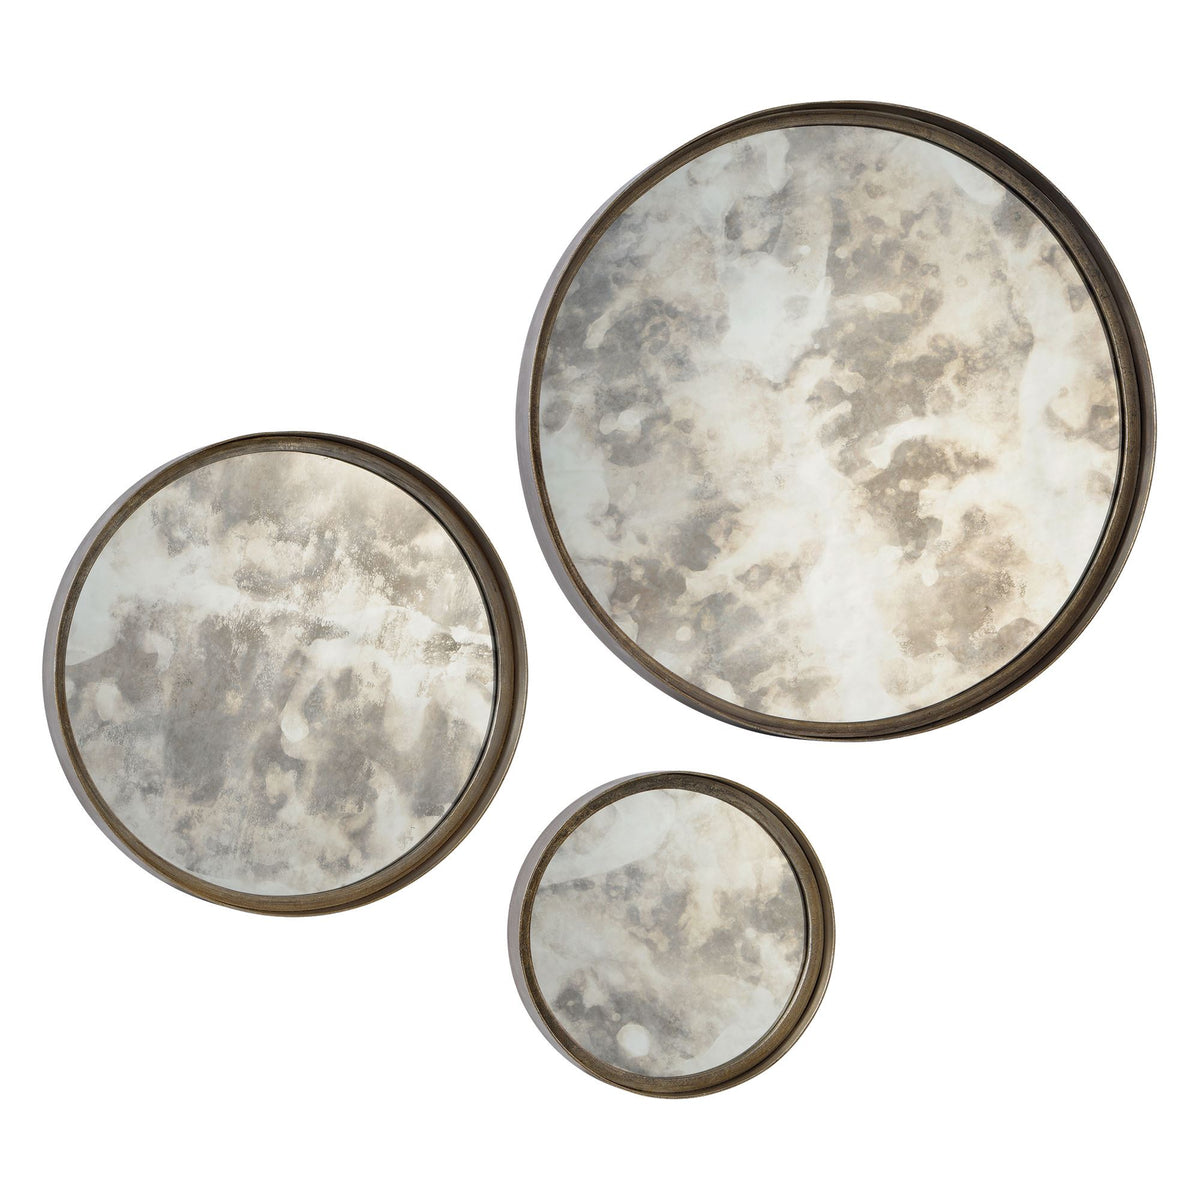 Silver Round Mirror - smoky mirror with silver tint